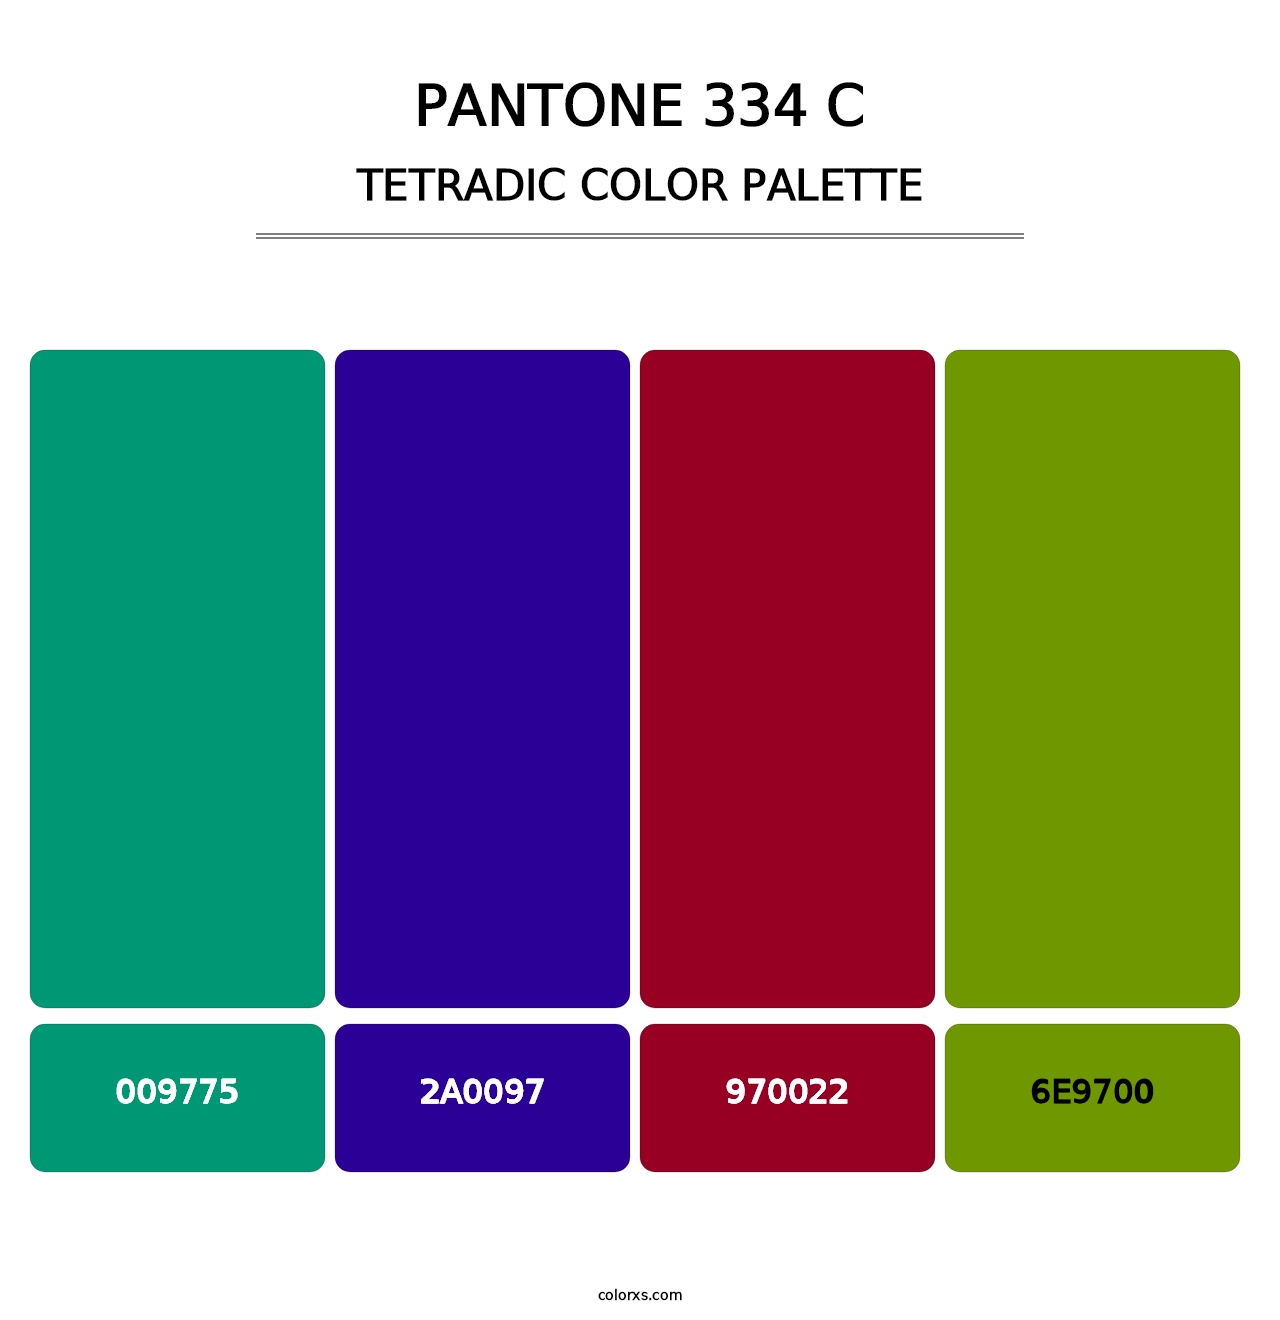 PANTONE 334 C - Tetradic Color Palette